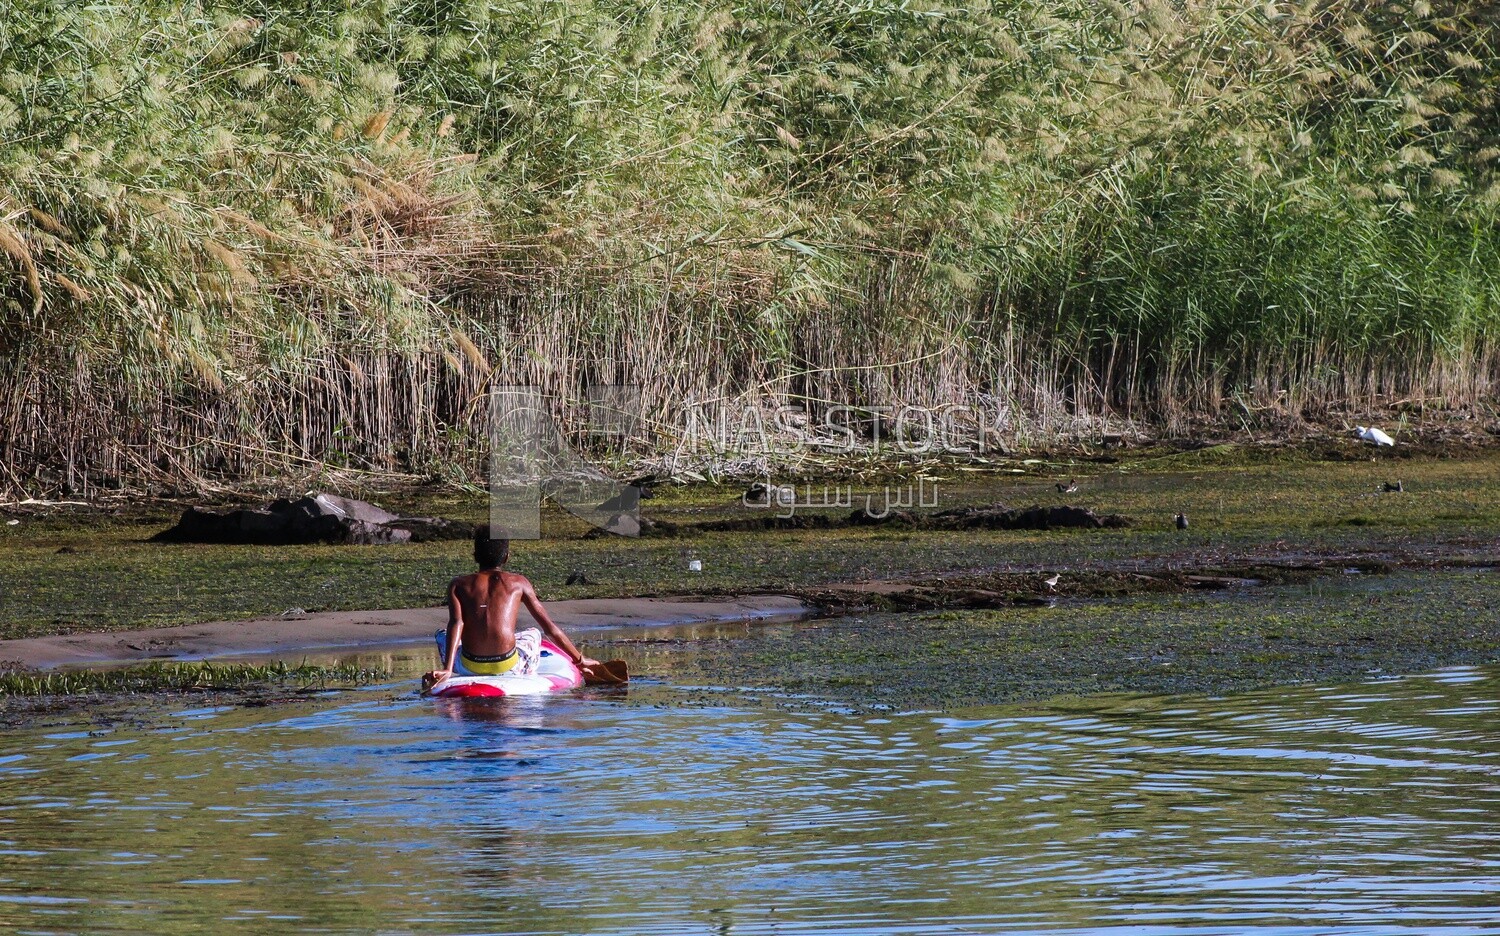 Teenage boy with dark skin swimming in the Nile River, Aswan,Egypt